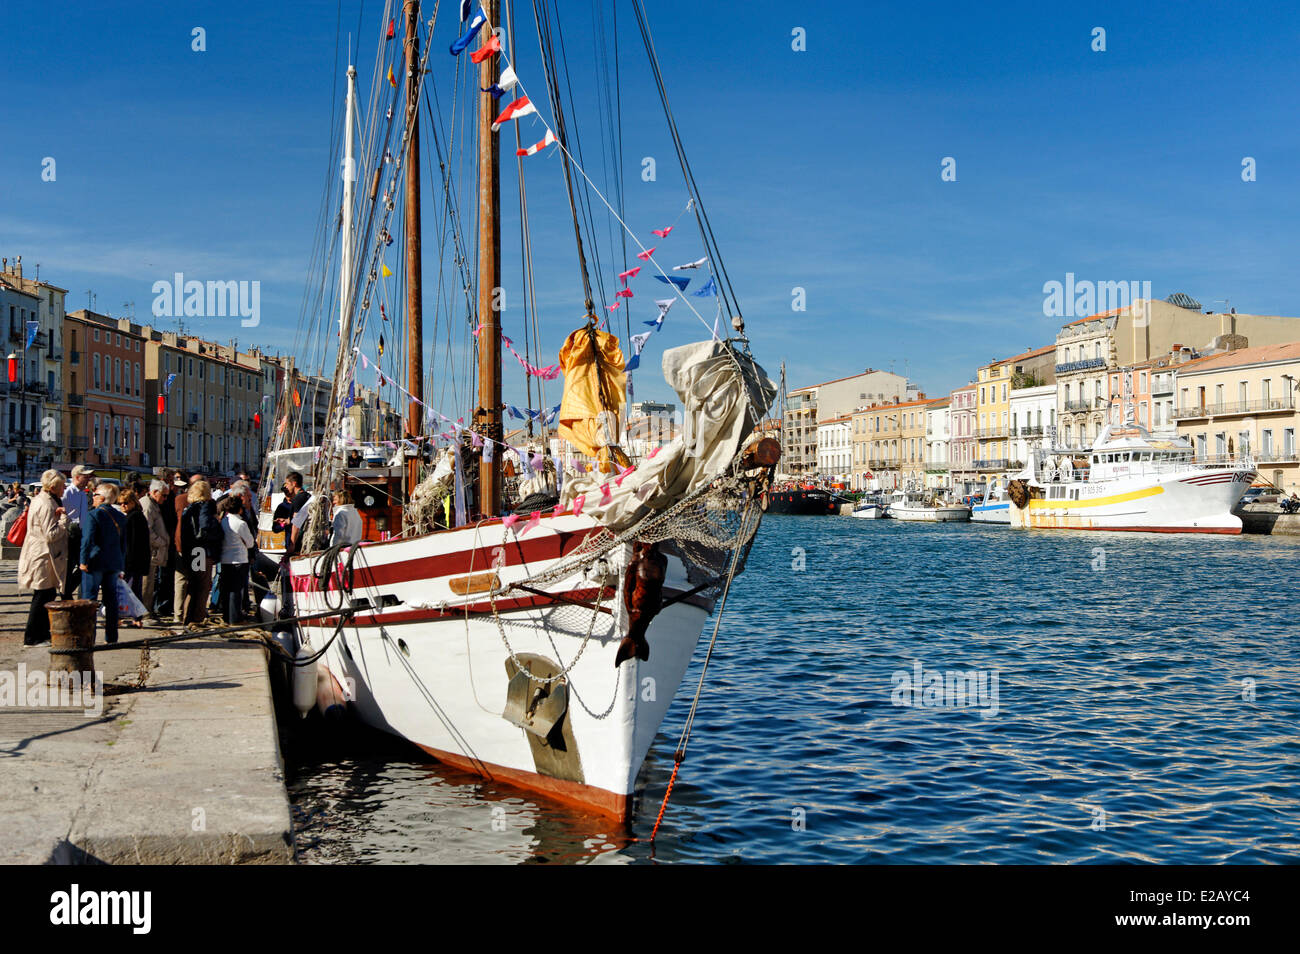 Francia, Herault, Sete, Canal Royal, Quai du General Durand, le tradizioni marittime Festival, walkers volto di vecchie navi a vela Foto Stock